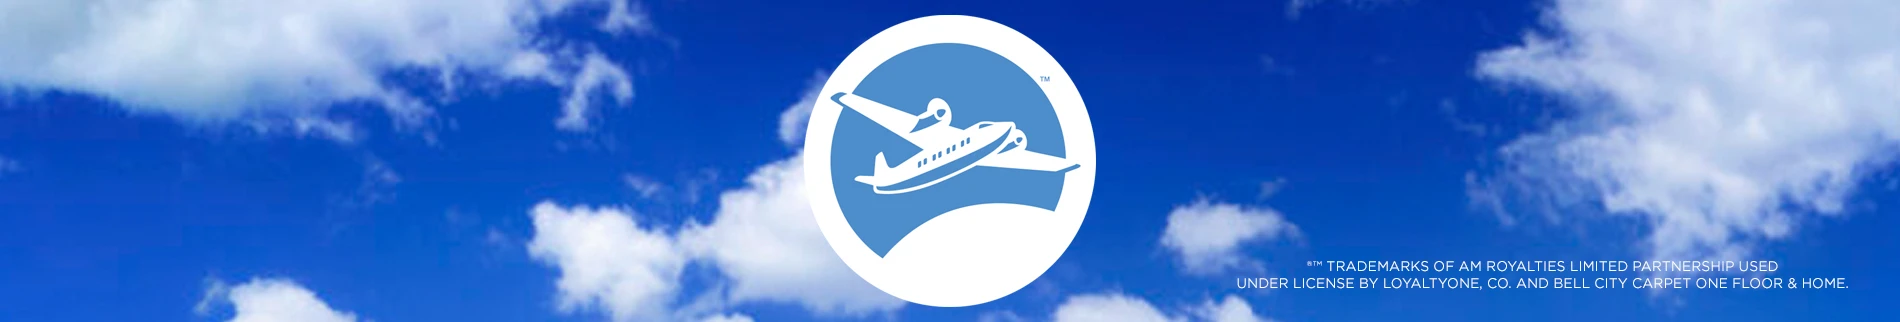 air-miles-rewards-program logo